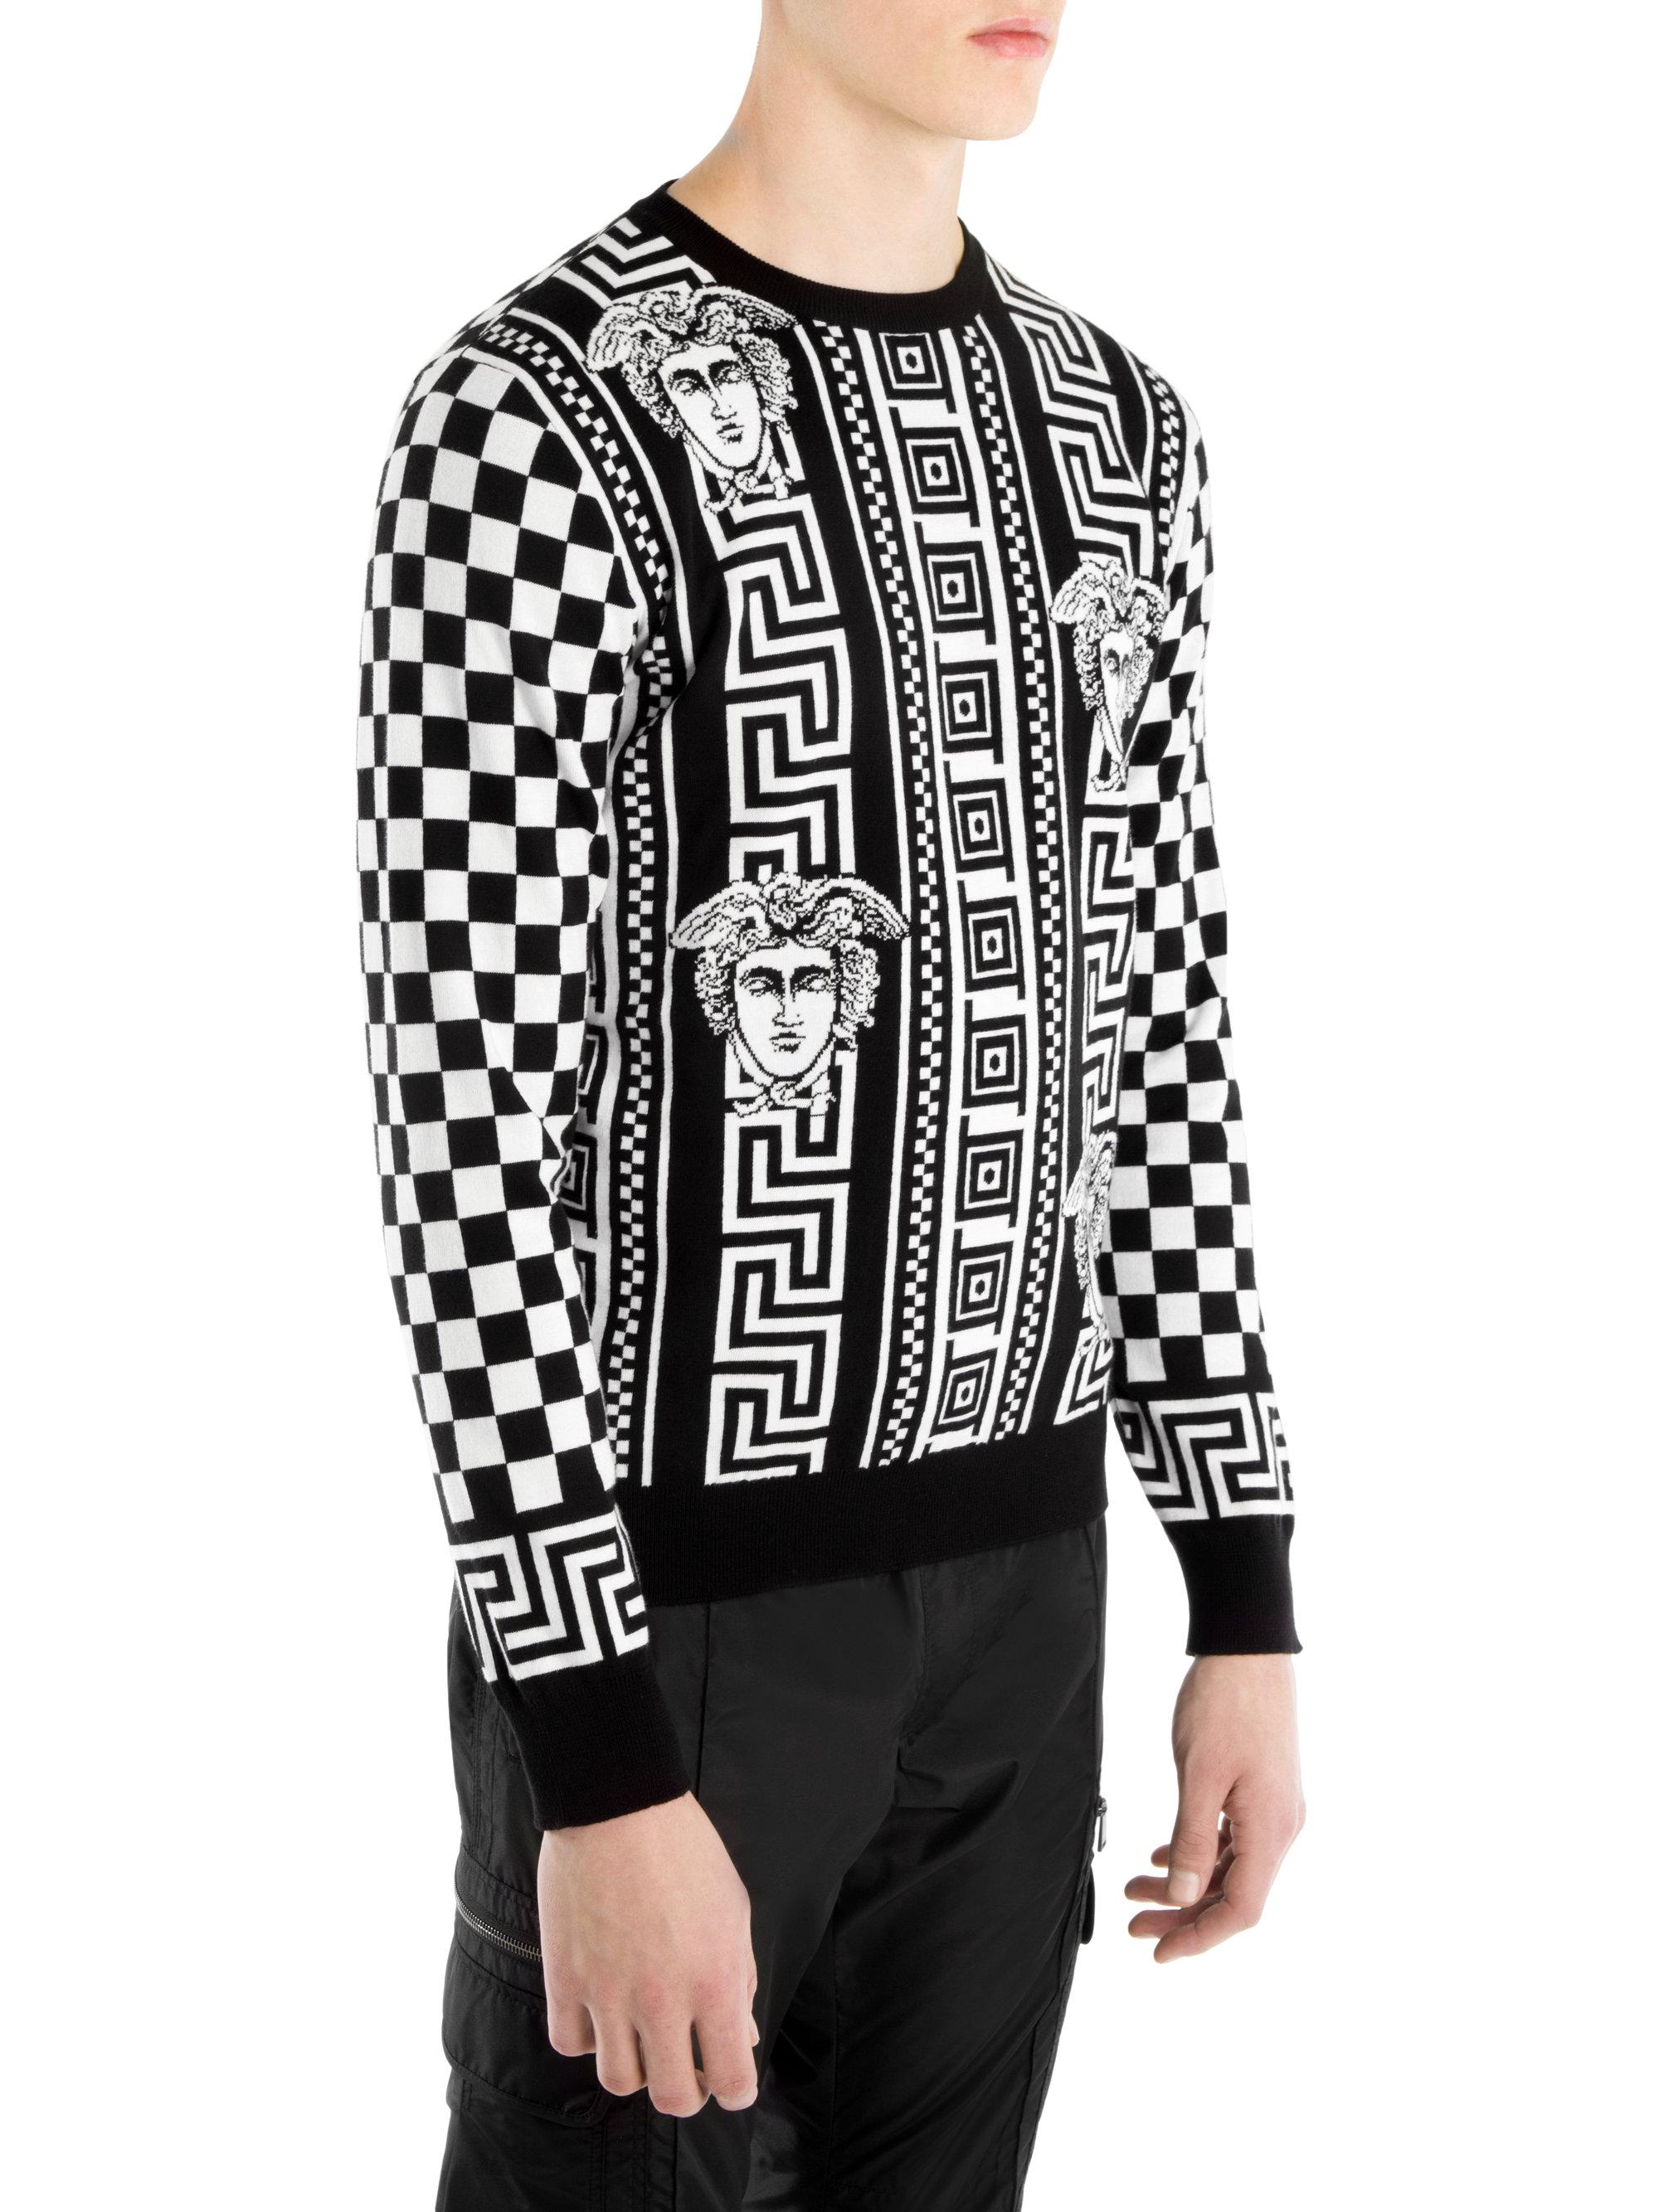 Lyst - Versace Greek Motif Checkered Jacquard Sweater in Black for Men